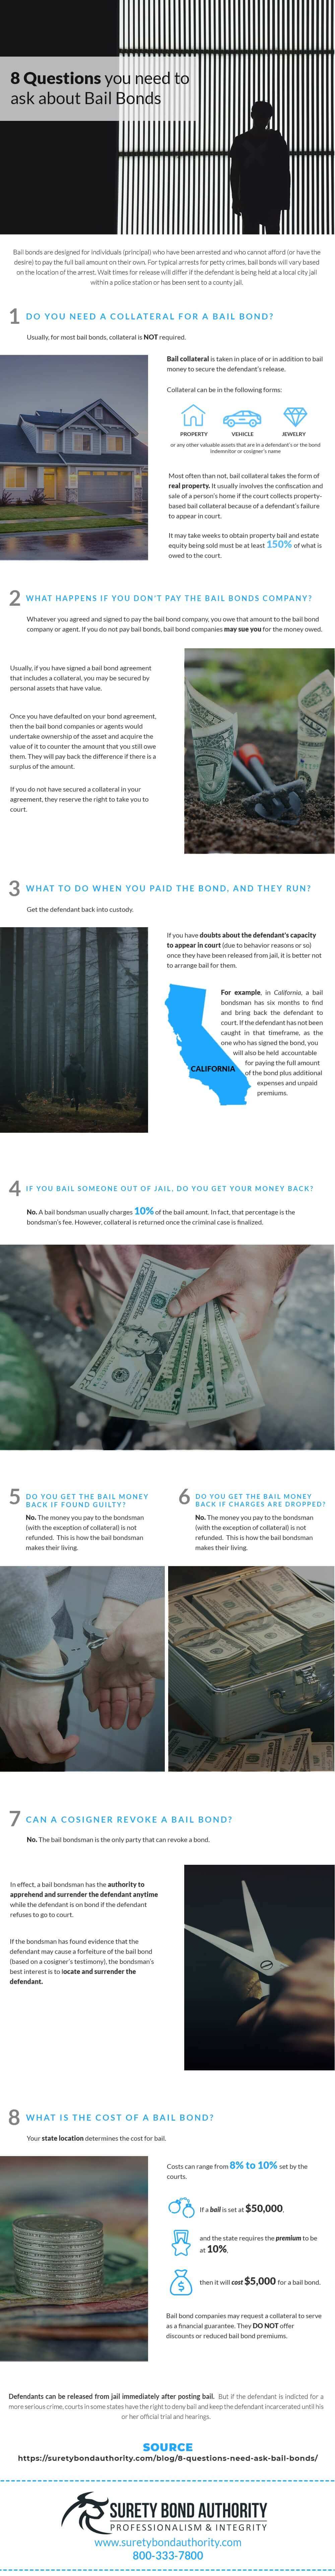 8 Questions about Bail Bonds Infographic